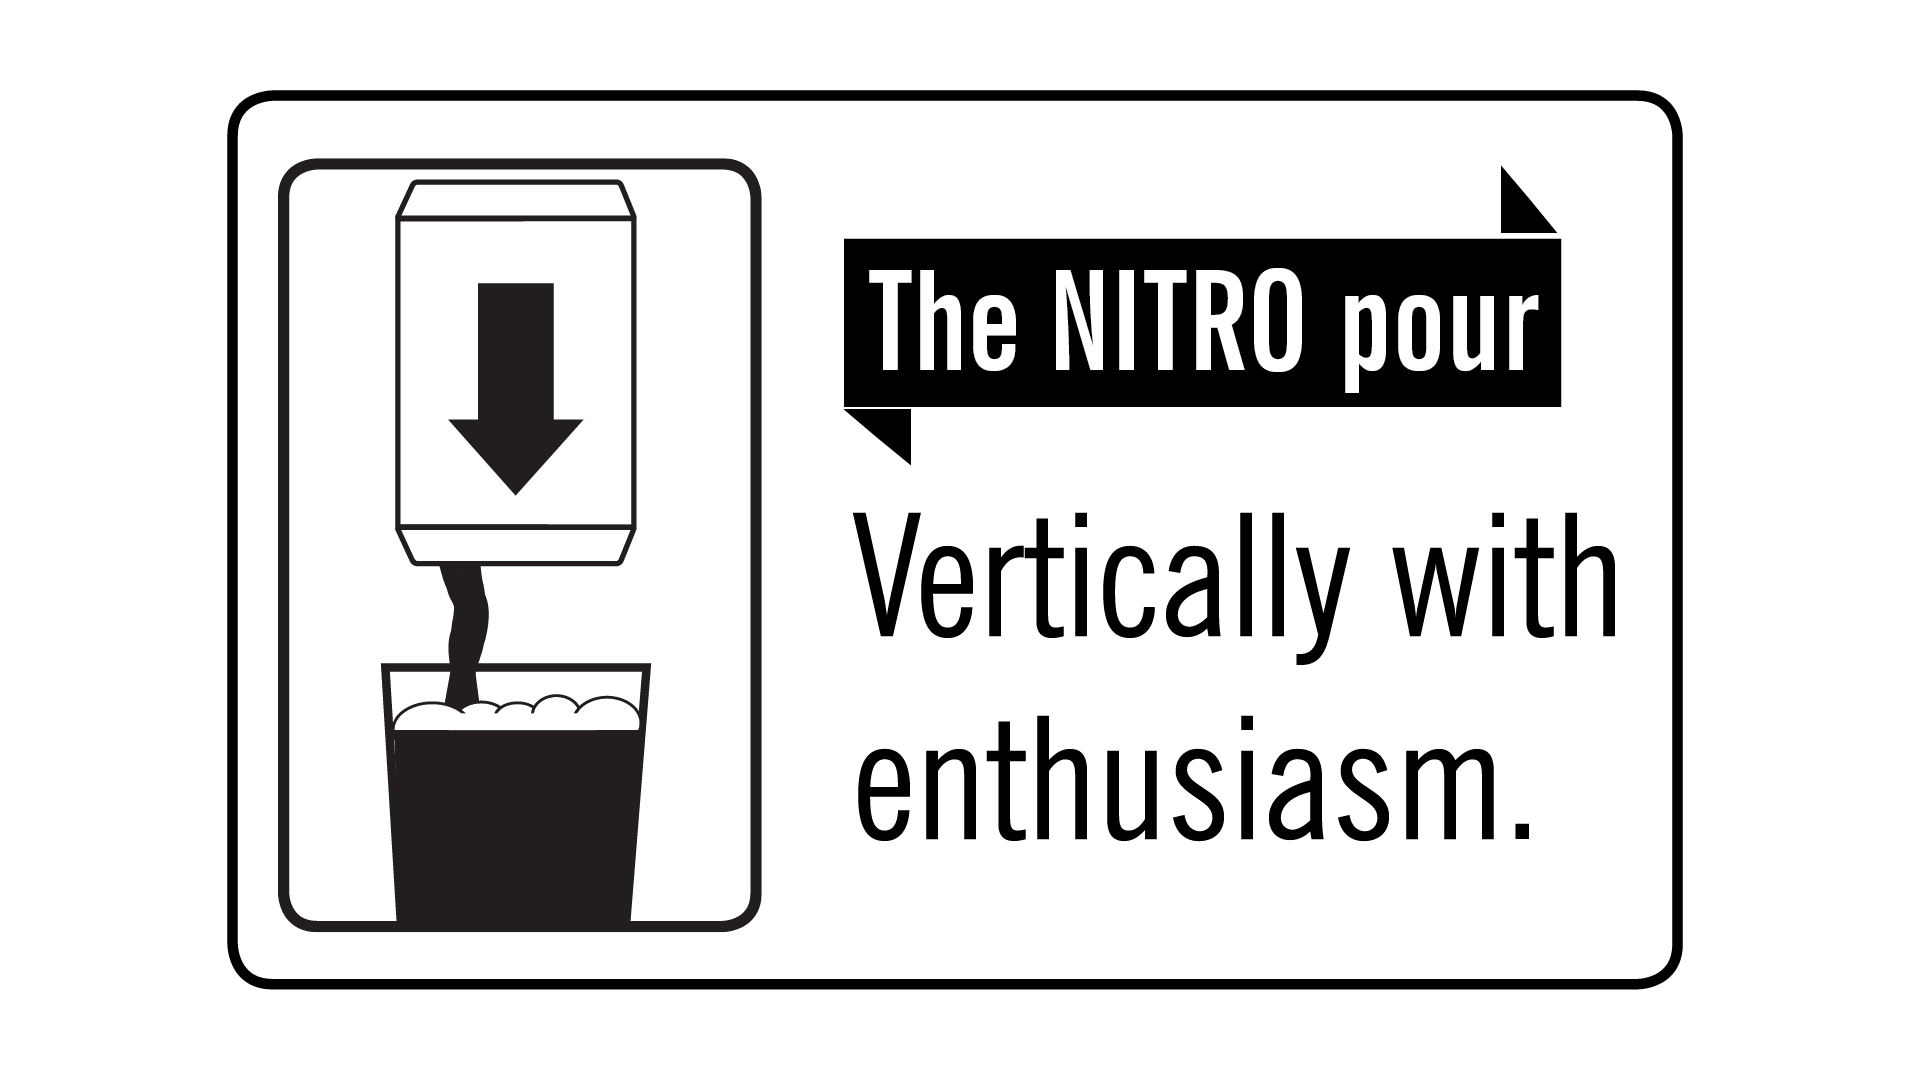 The nitro pouring technique explained by Mornington